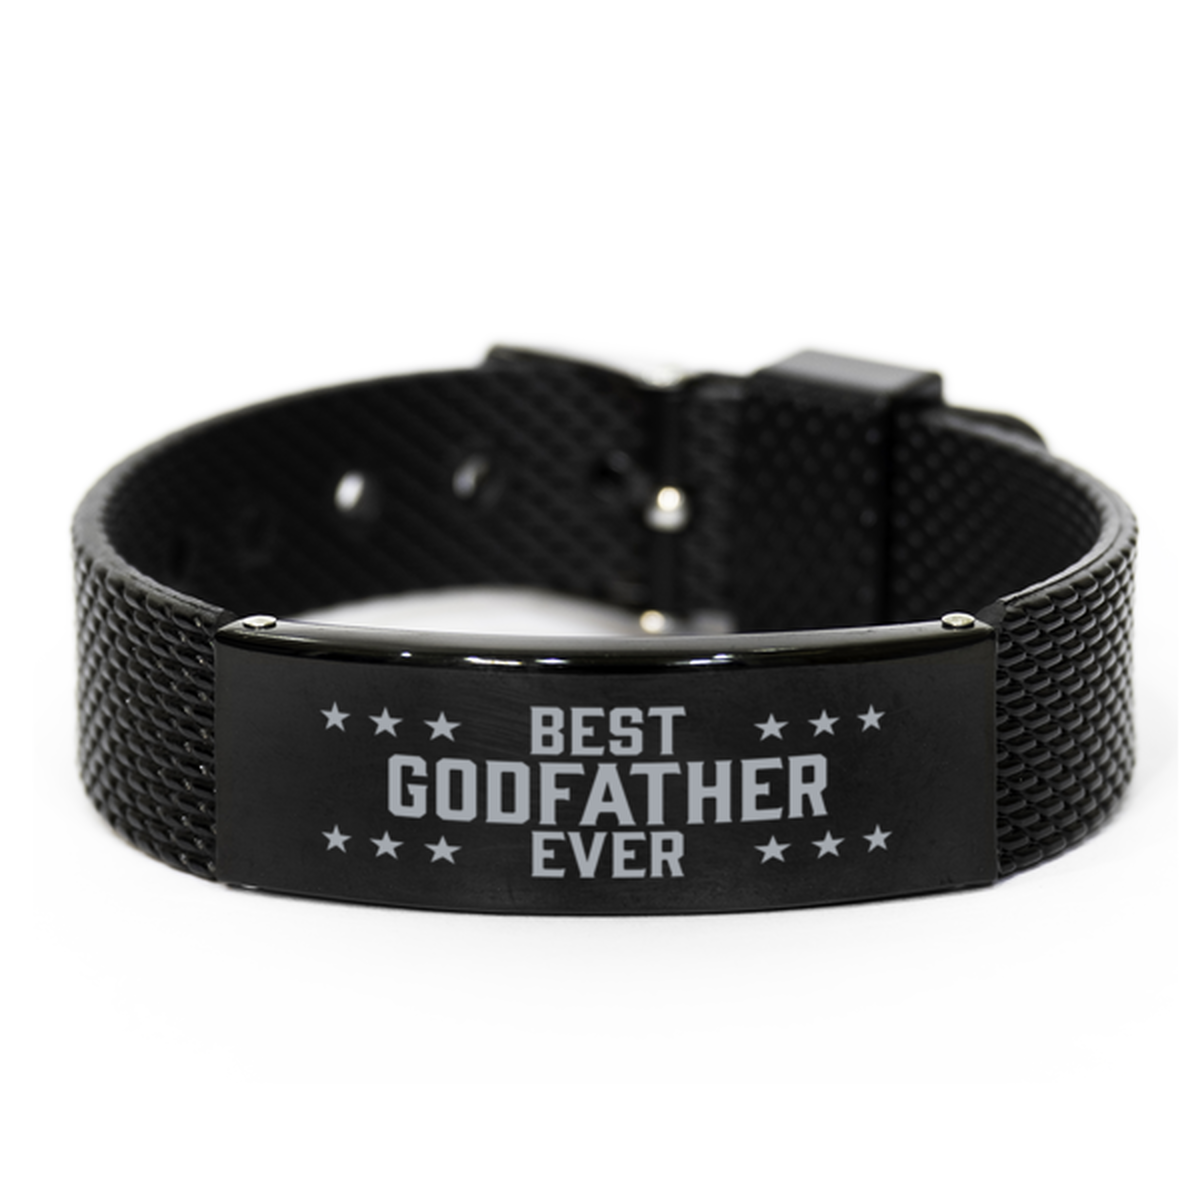 Best Godfather Ever Godfather Gifts, Gag Engraved Bracelet For Godfather, Best Family Gifts For Men